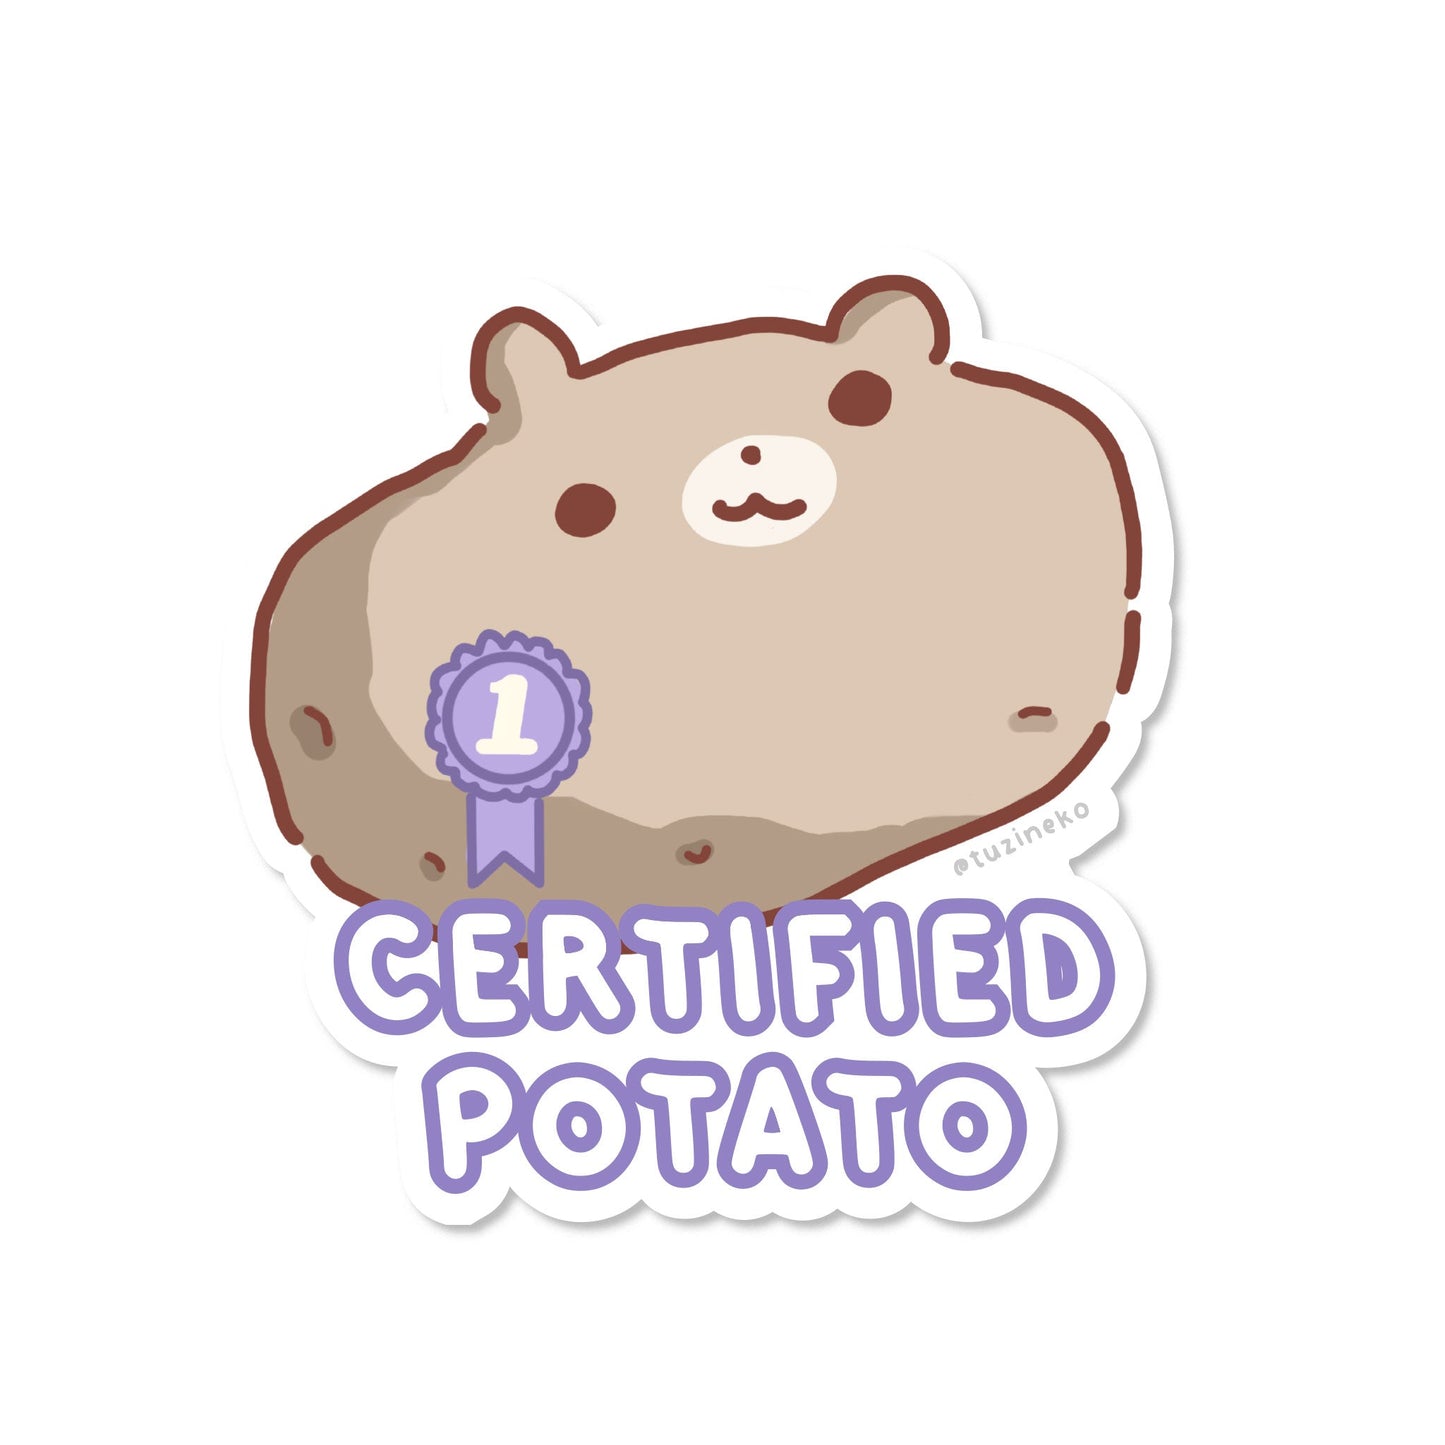 Gom "Certified Potato" Matte Waterproof Sticker with Gloss Spot UV